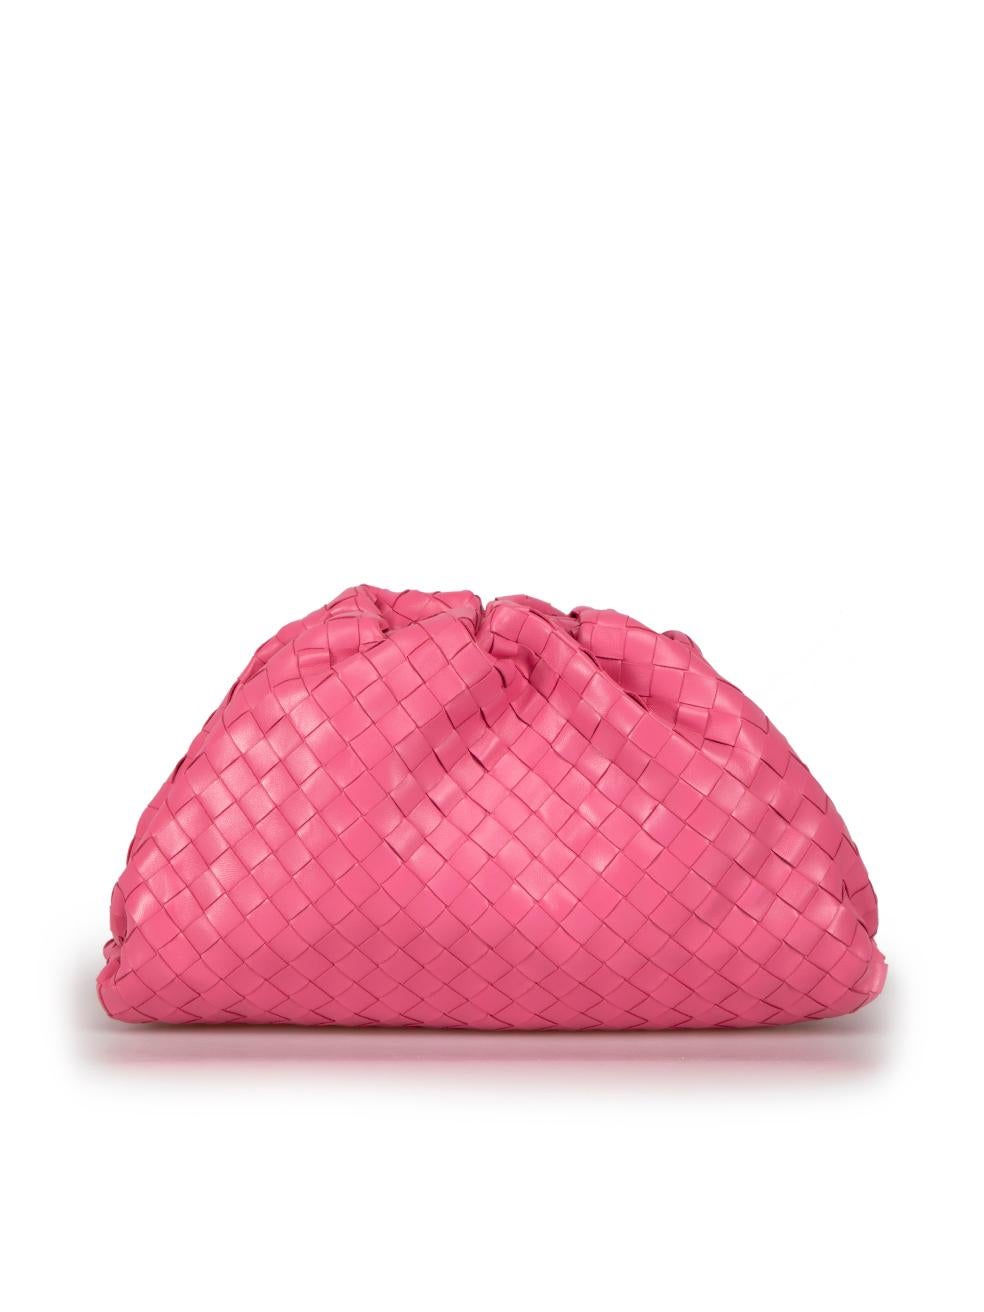 Bottega Veneta Pink Leather Intrecciato Clutch In Excellent Condition In London, GB